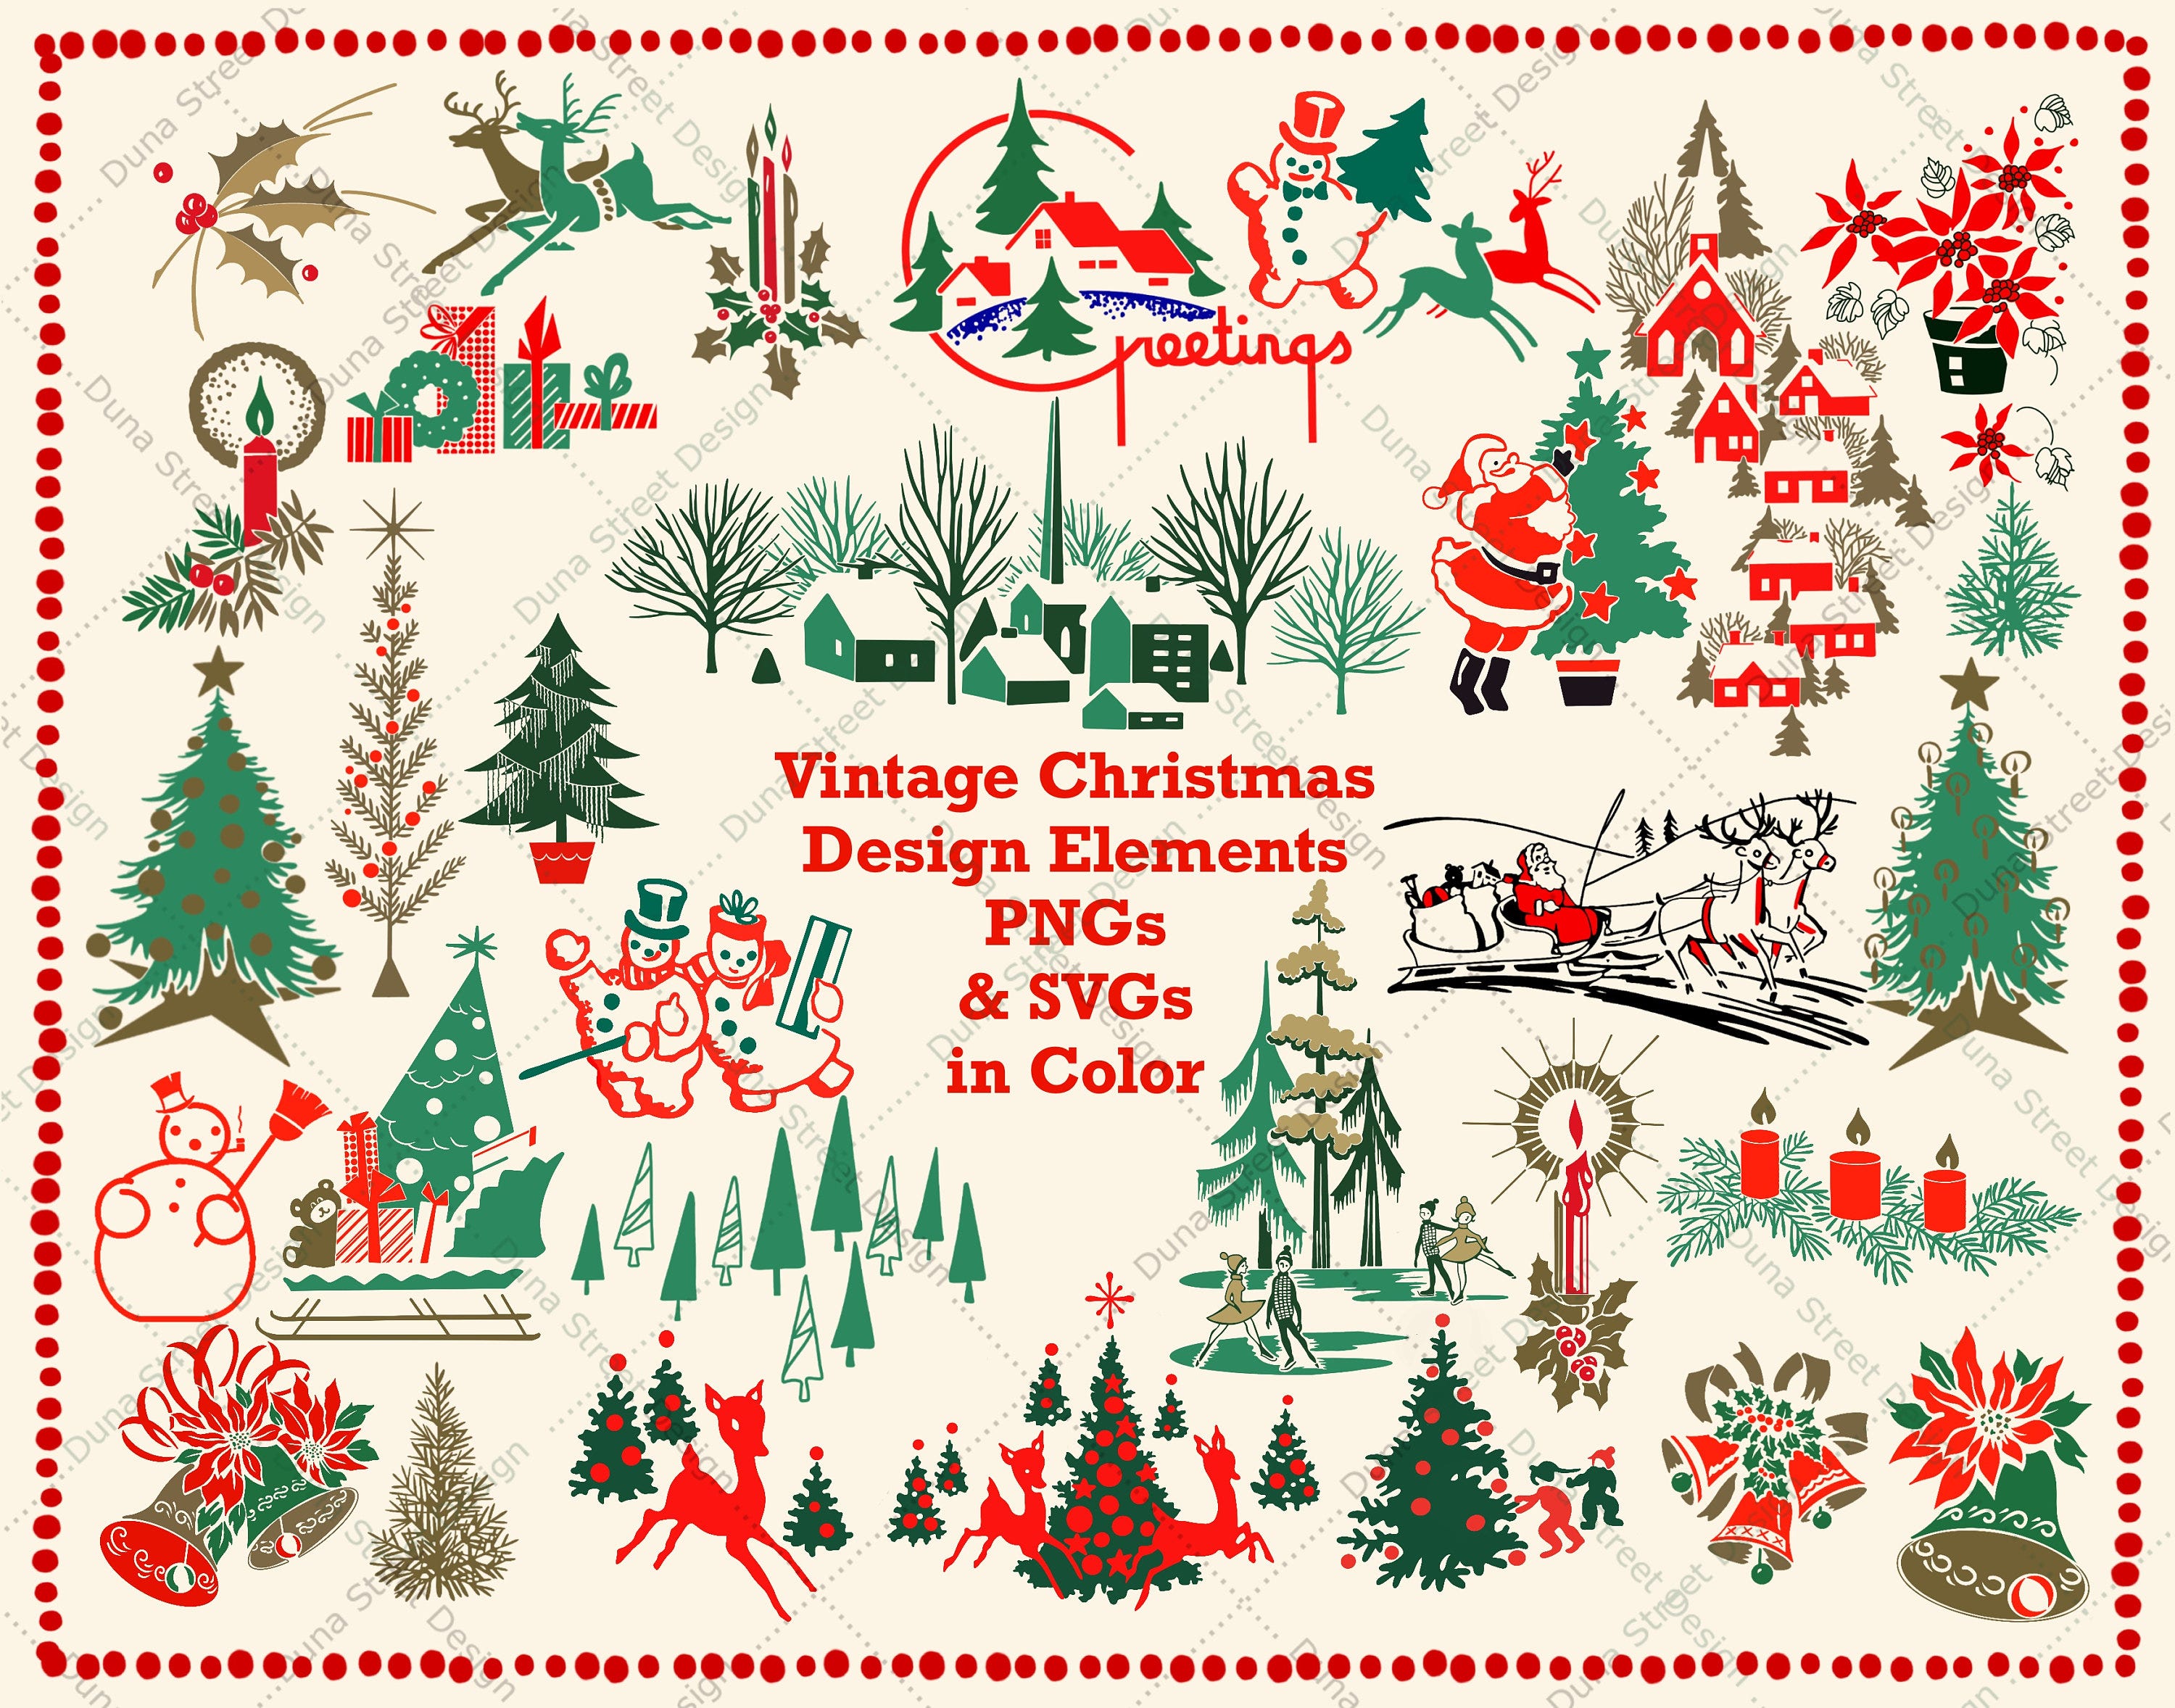 PNG & SVG Vintage Christmas Clipart Design Elements 1940s 1950s | Digital Download Files | Midcentury Retro Deer Winter Trees Santa Presents